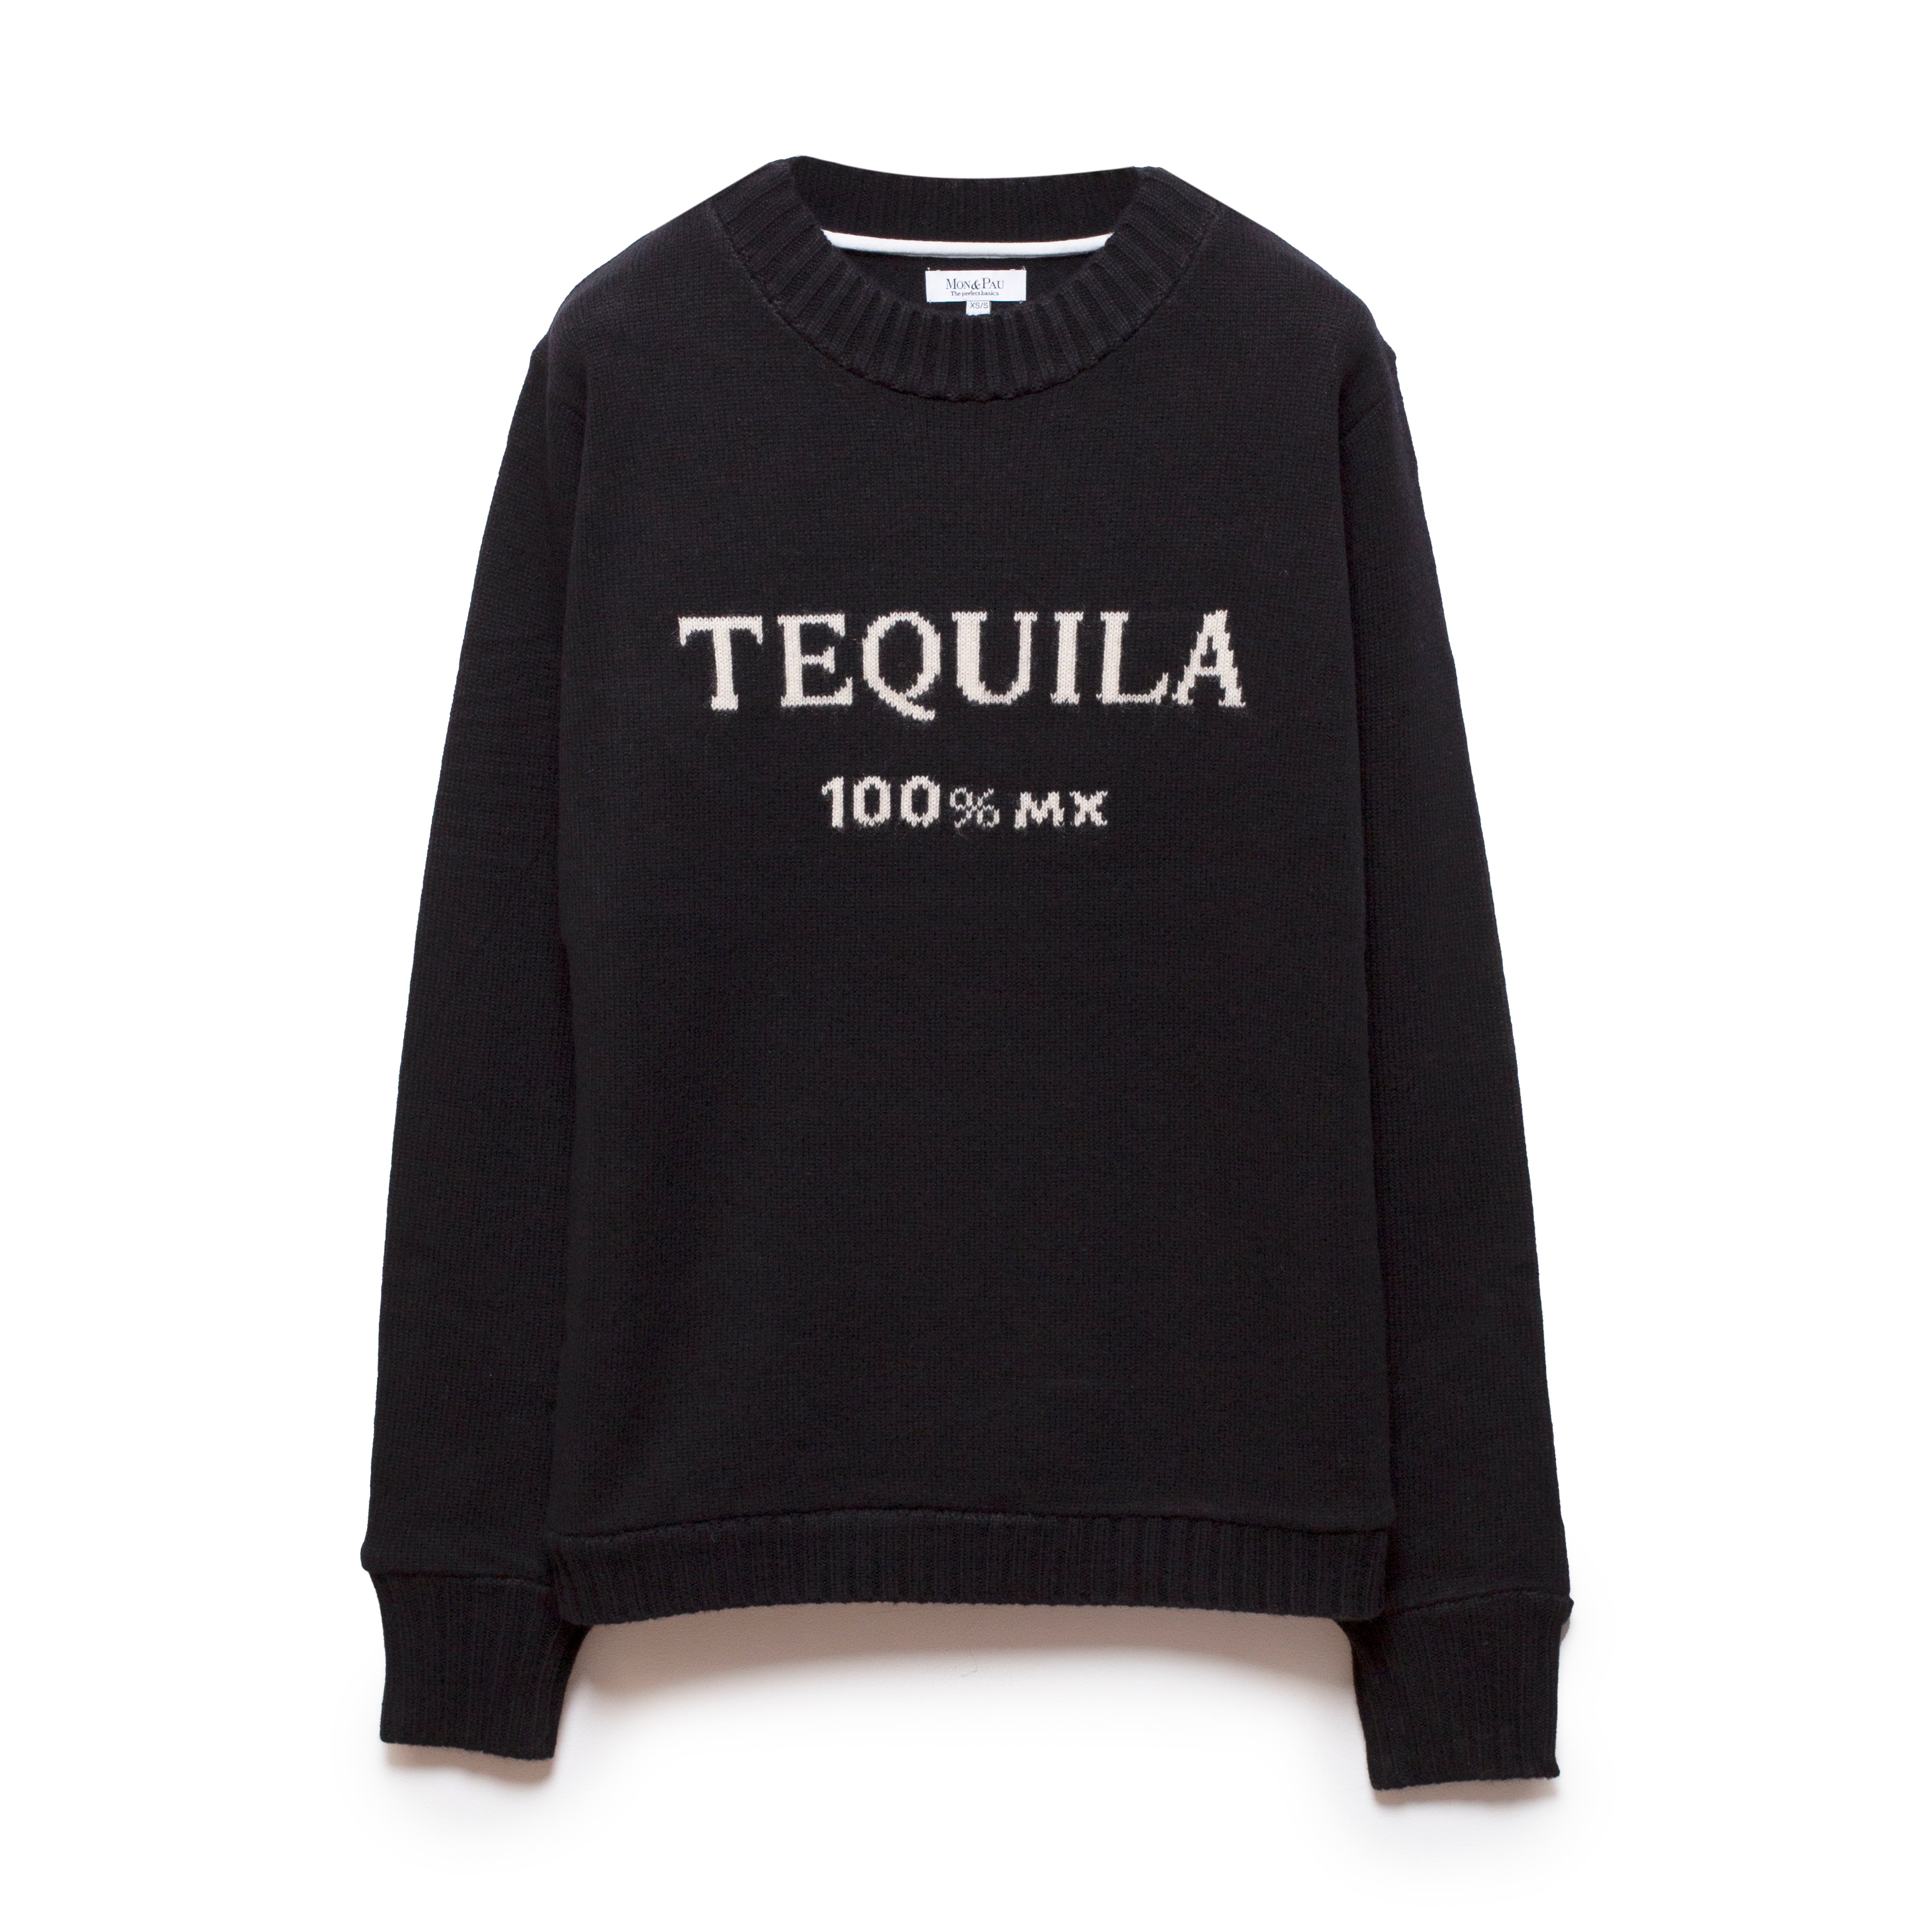 "Tequila" Sweater Black